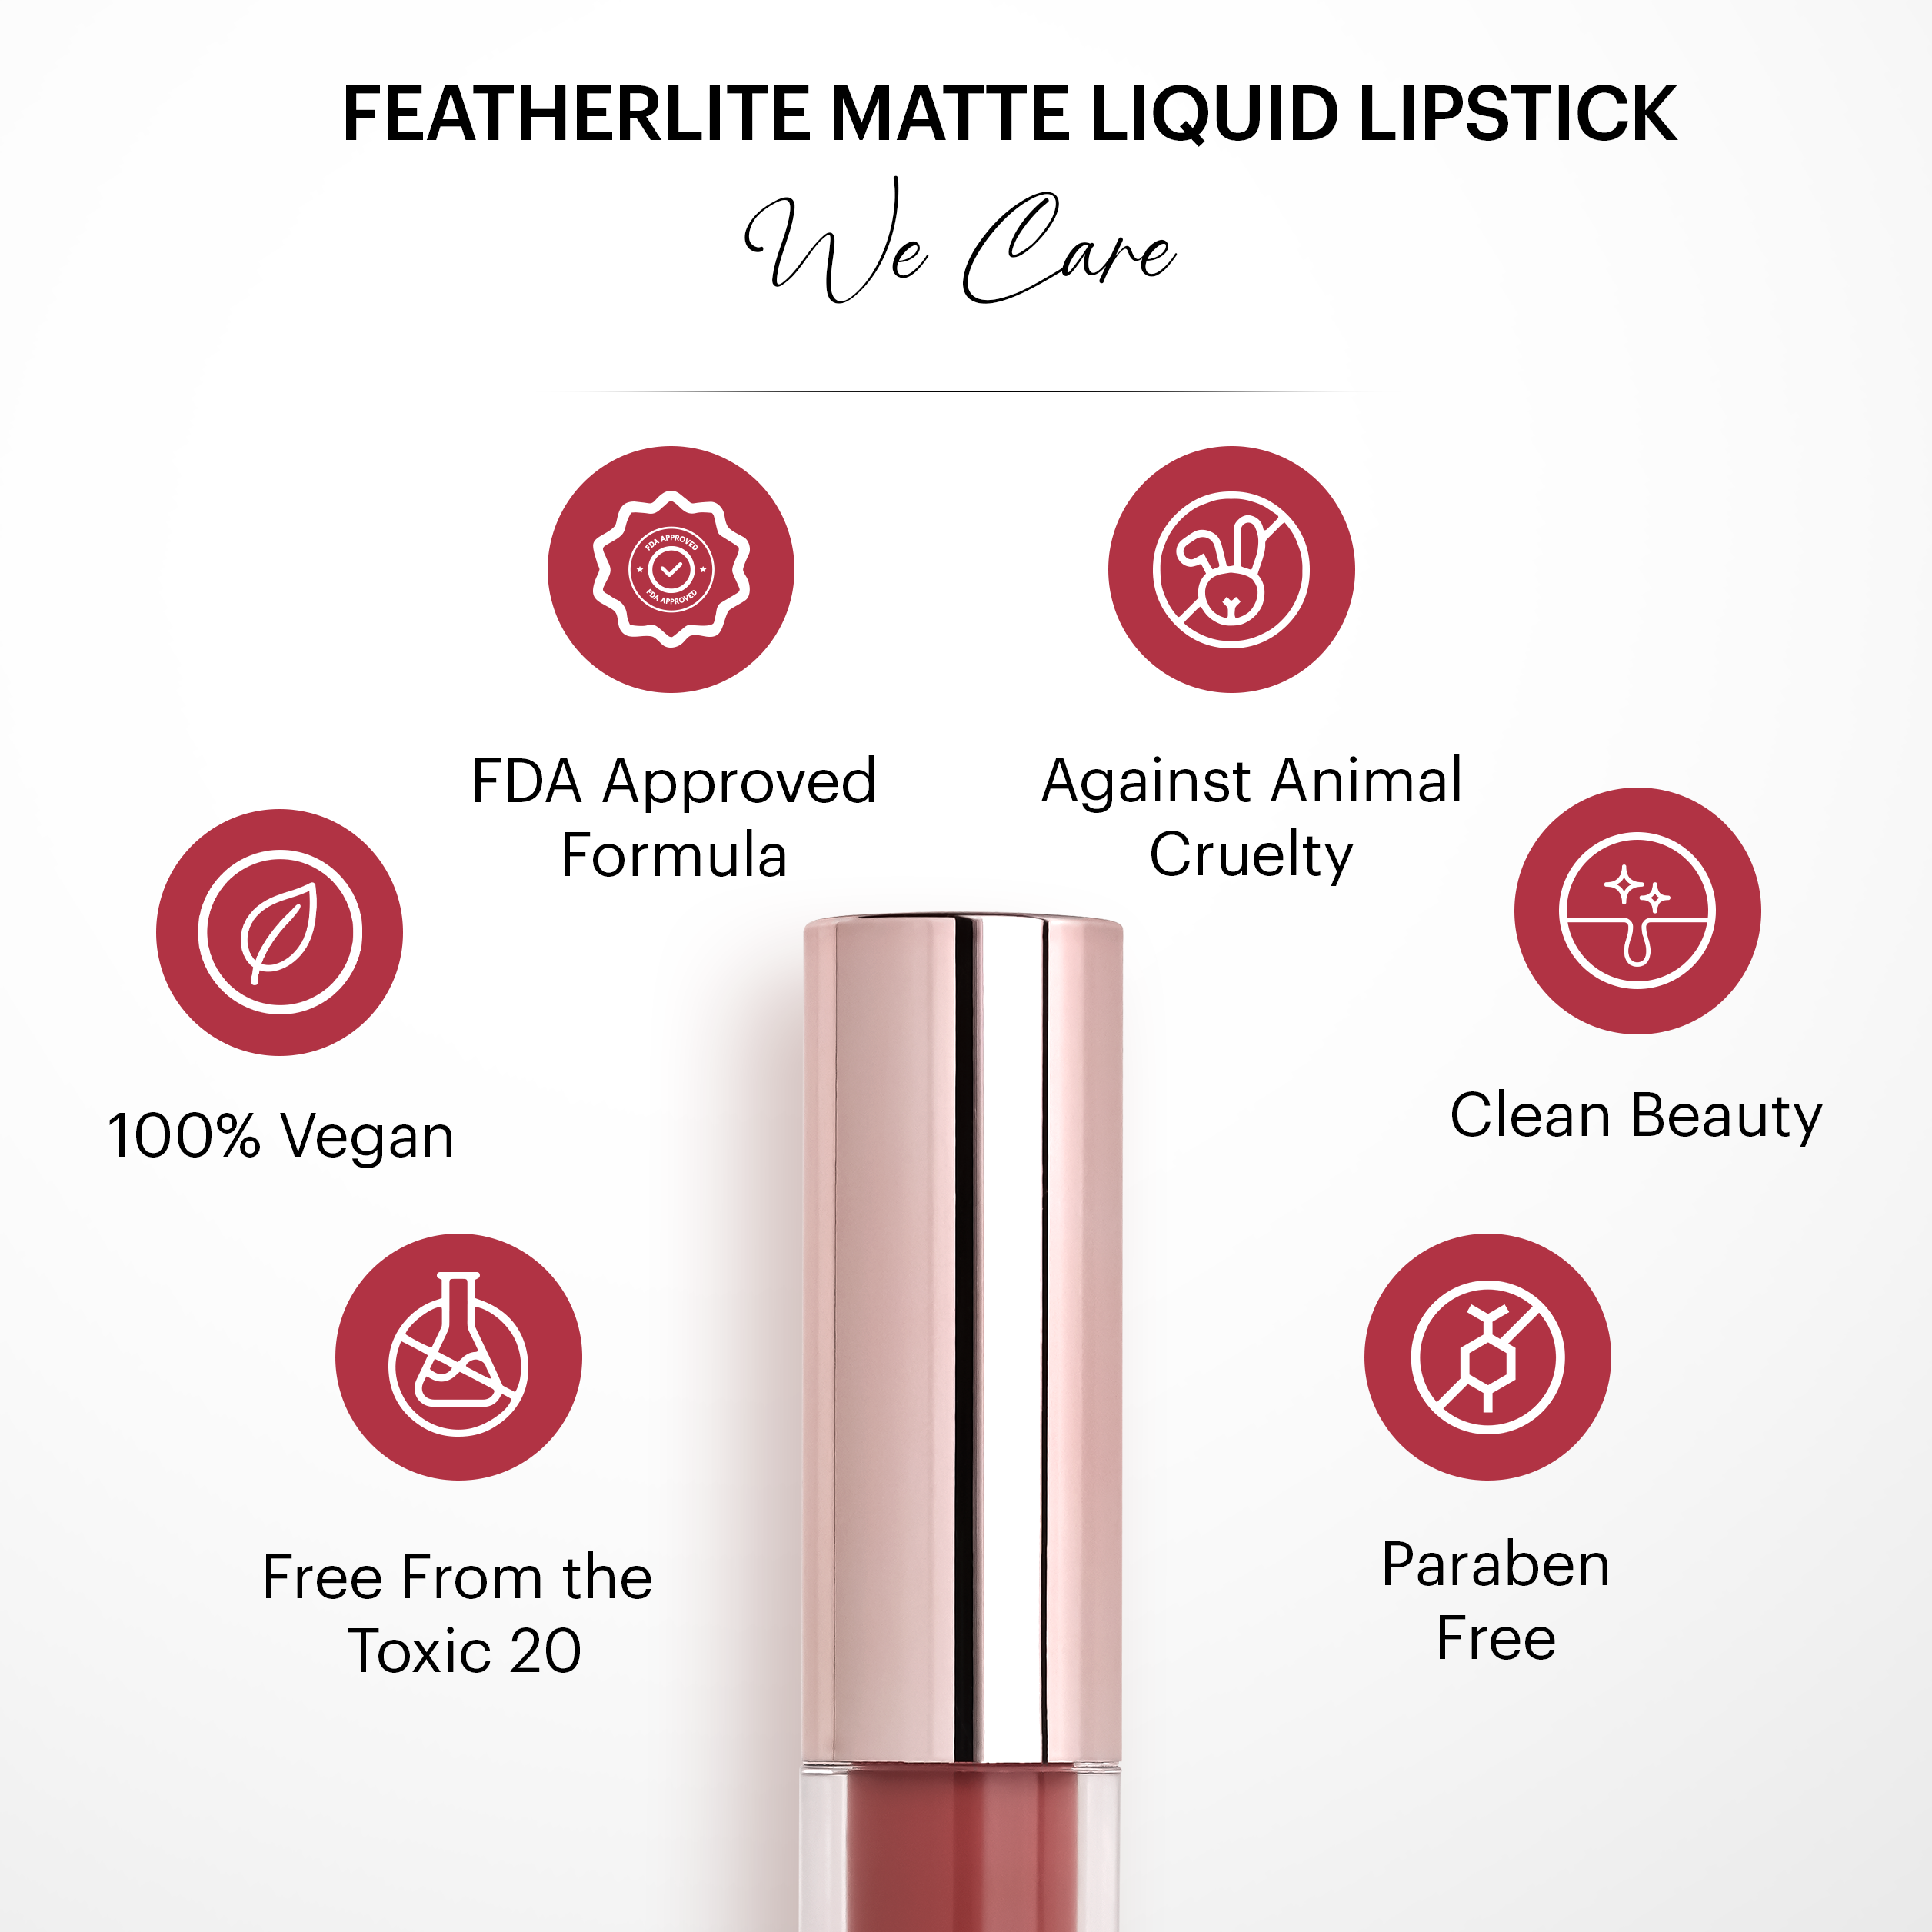 Featherlite Matte Liquid Lipstick: Bliss 35